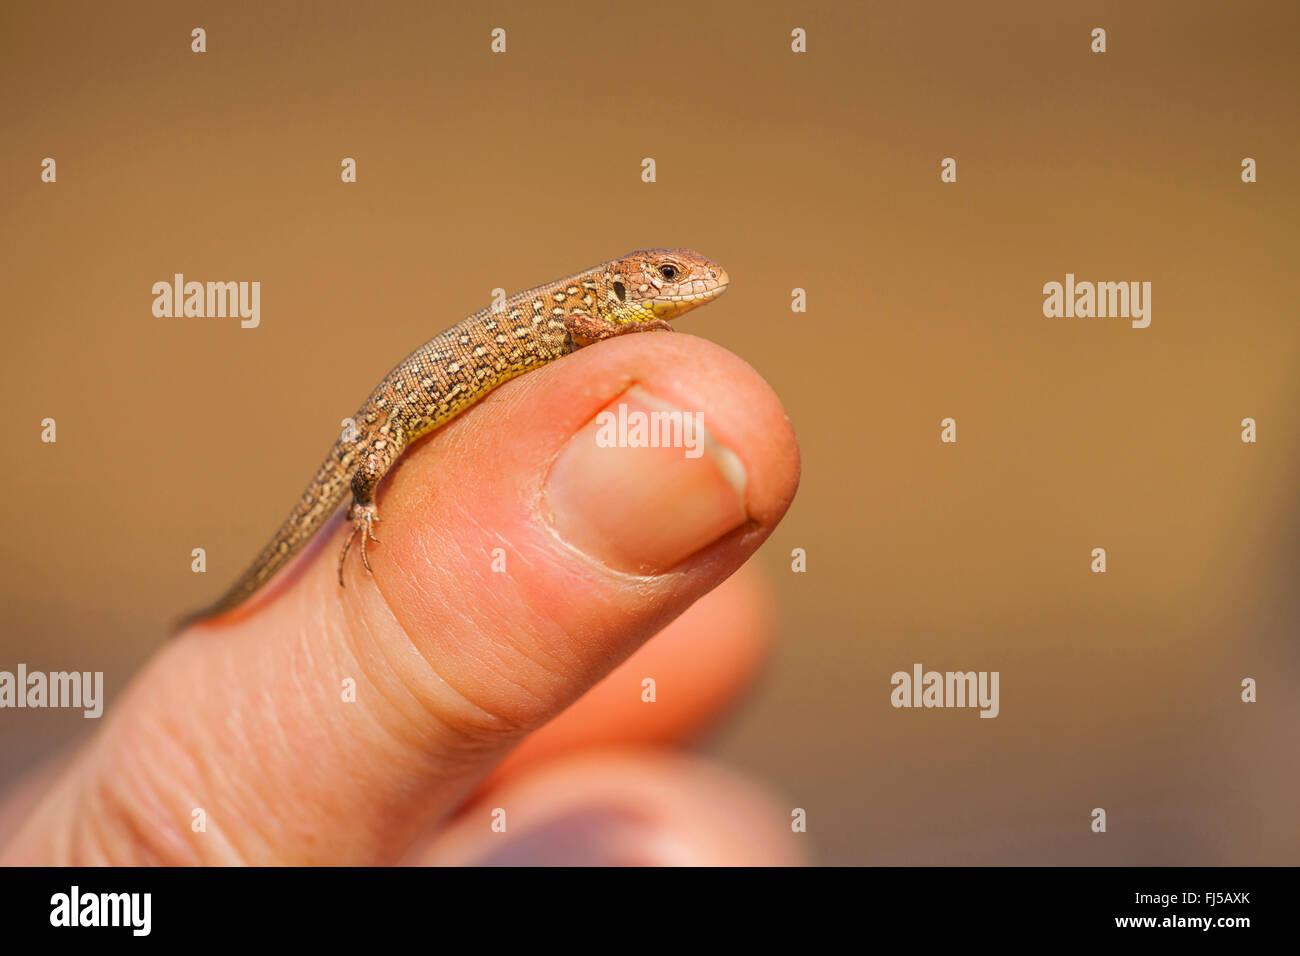 sand lizard (Lacerta agilis), juvenile on a Hand, Germany, Rhineland-Palatinate Stock Photo